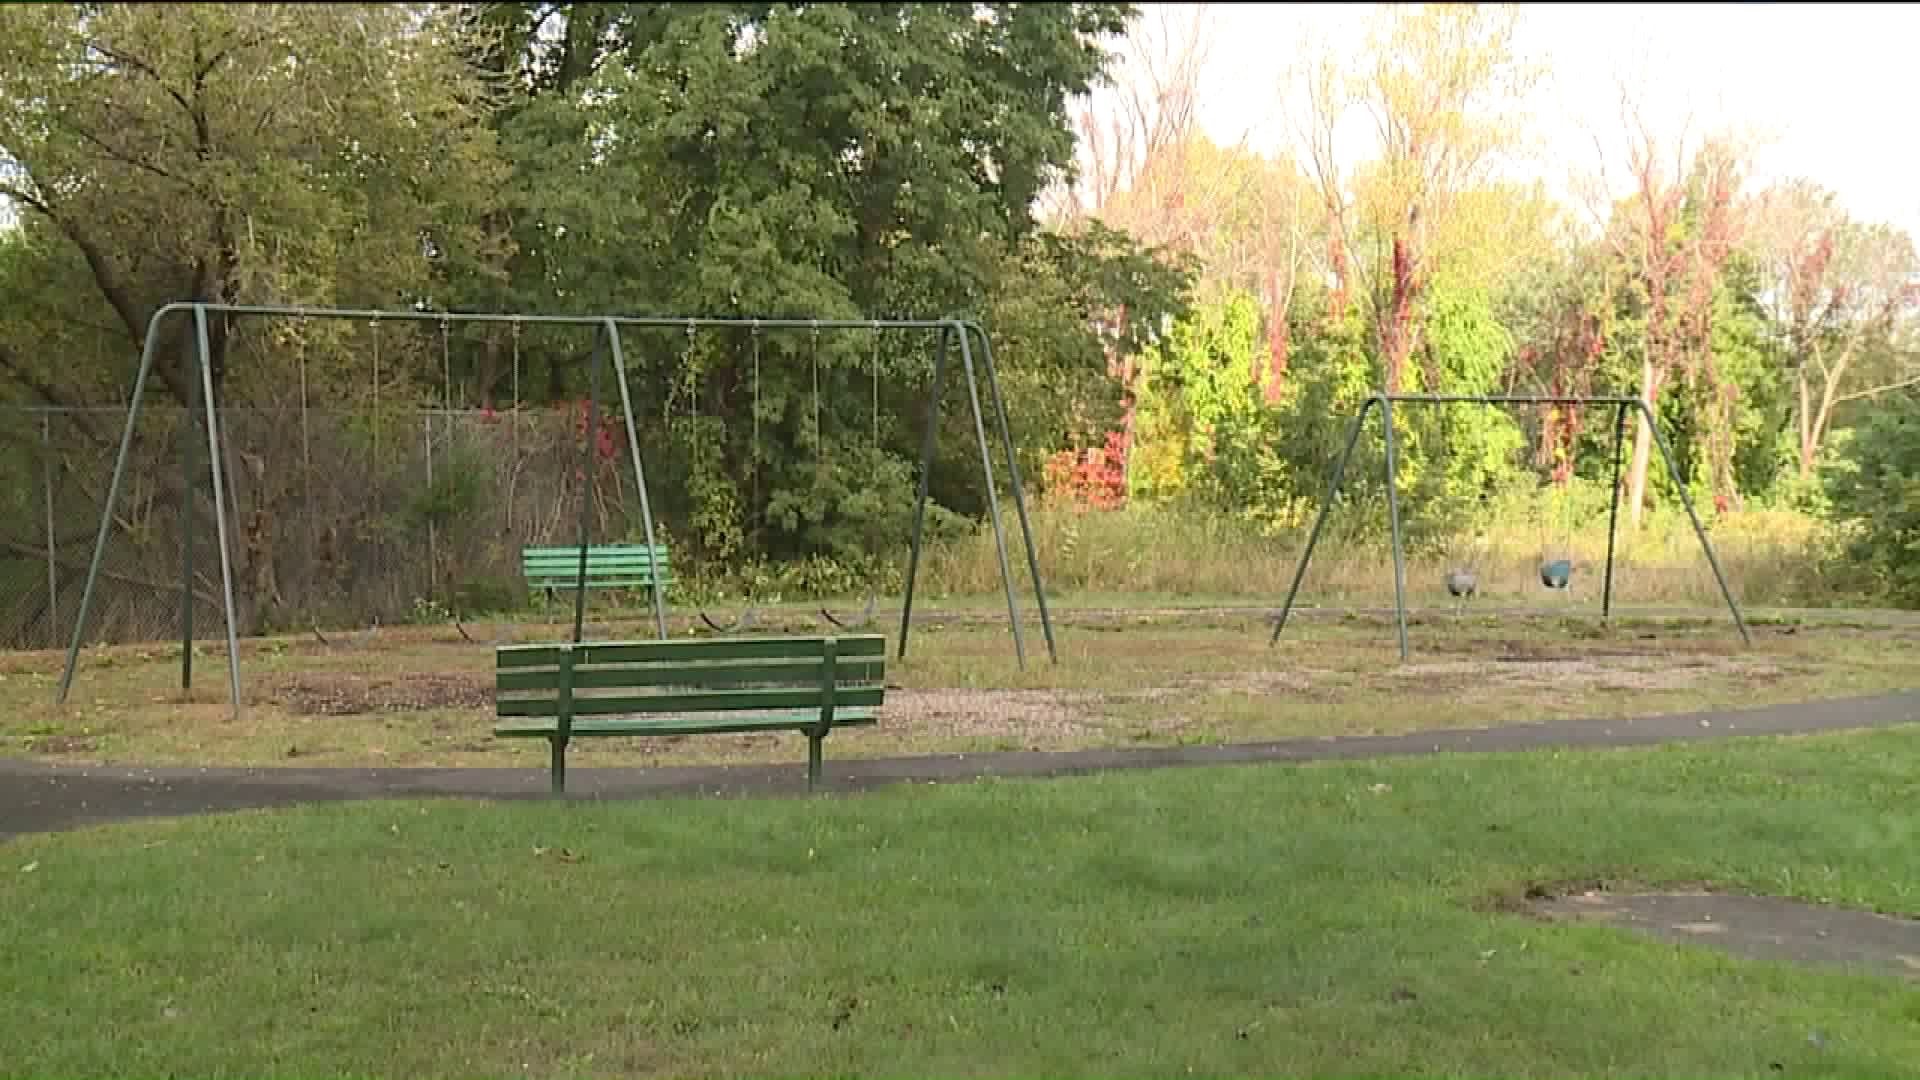 Scranton Park Renovations Planned, Neighbors Voice Concerns